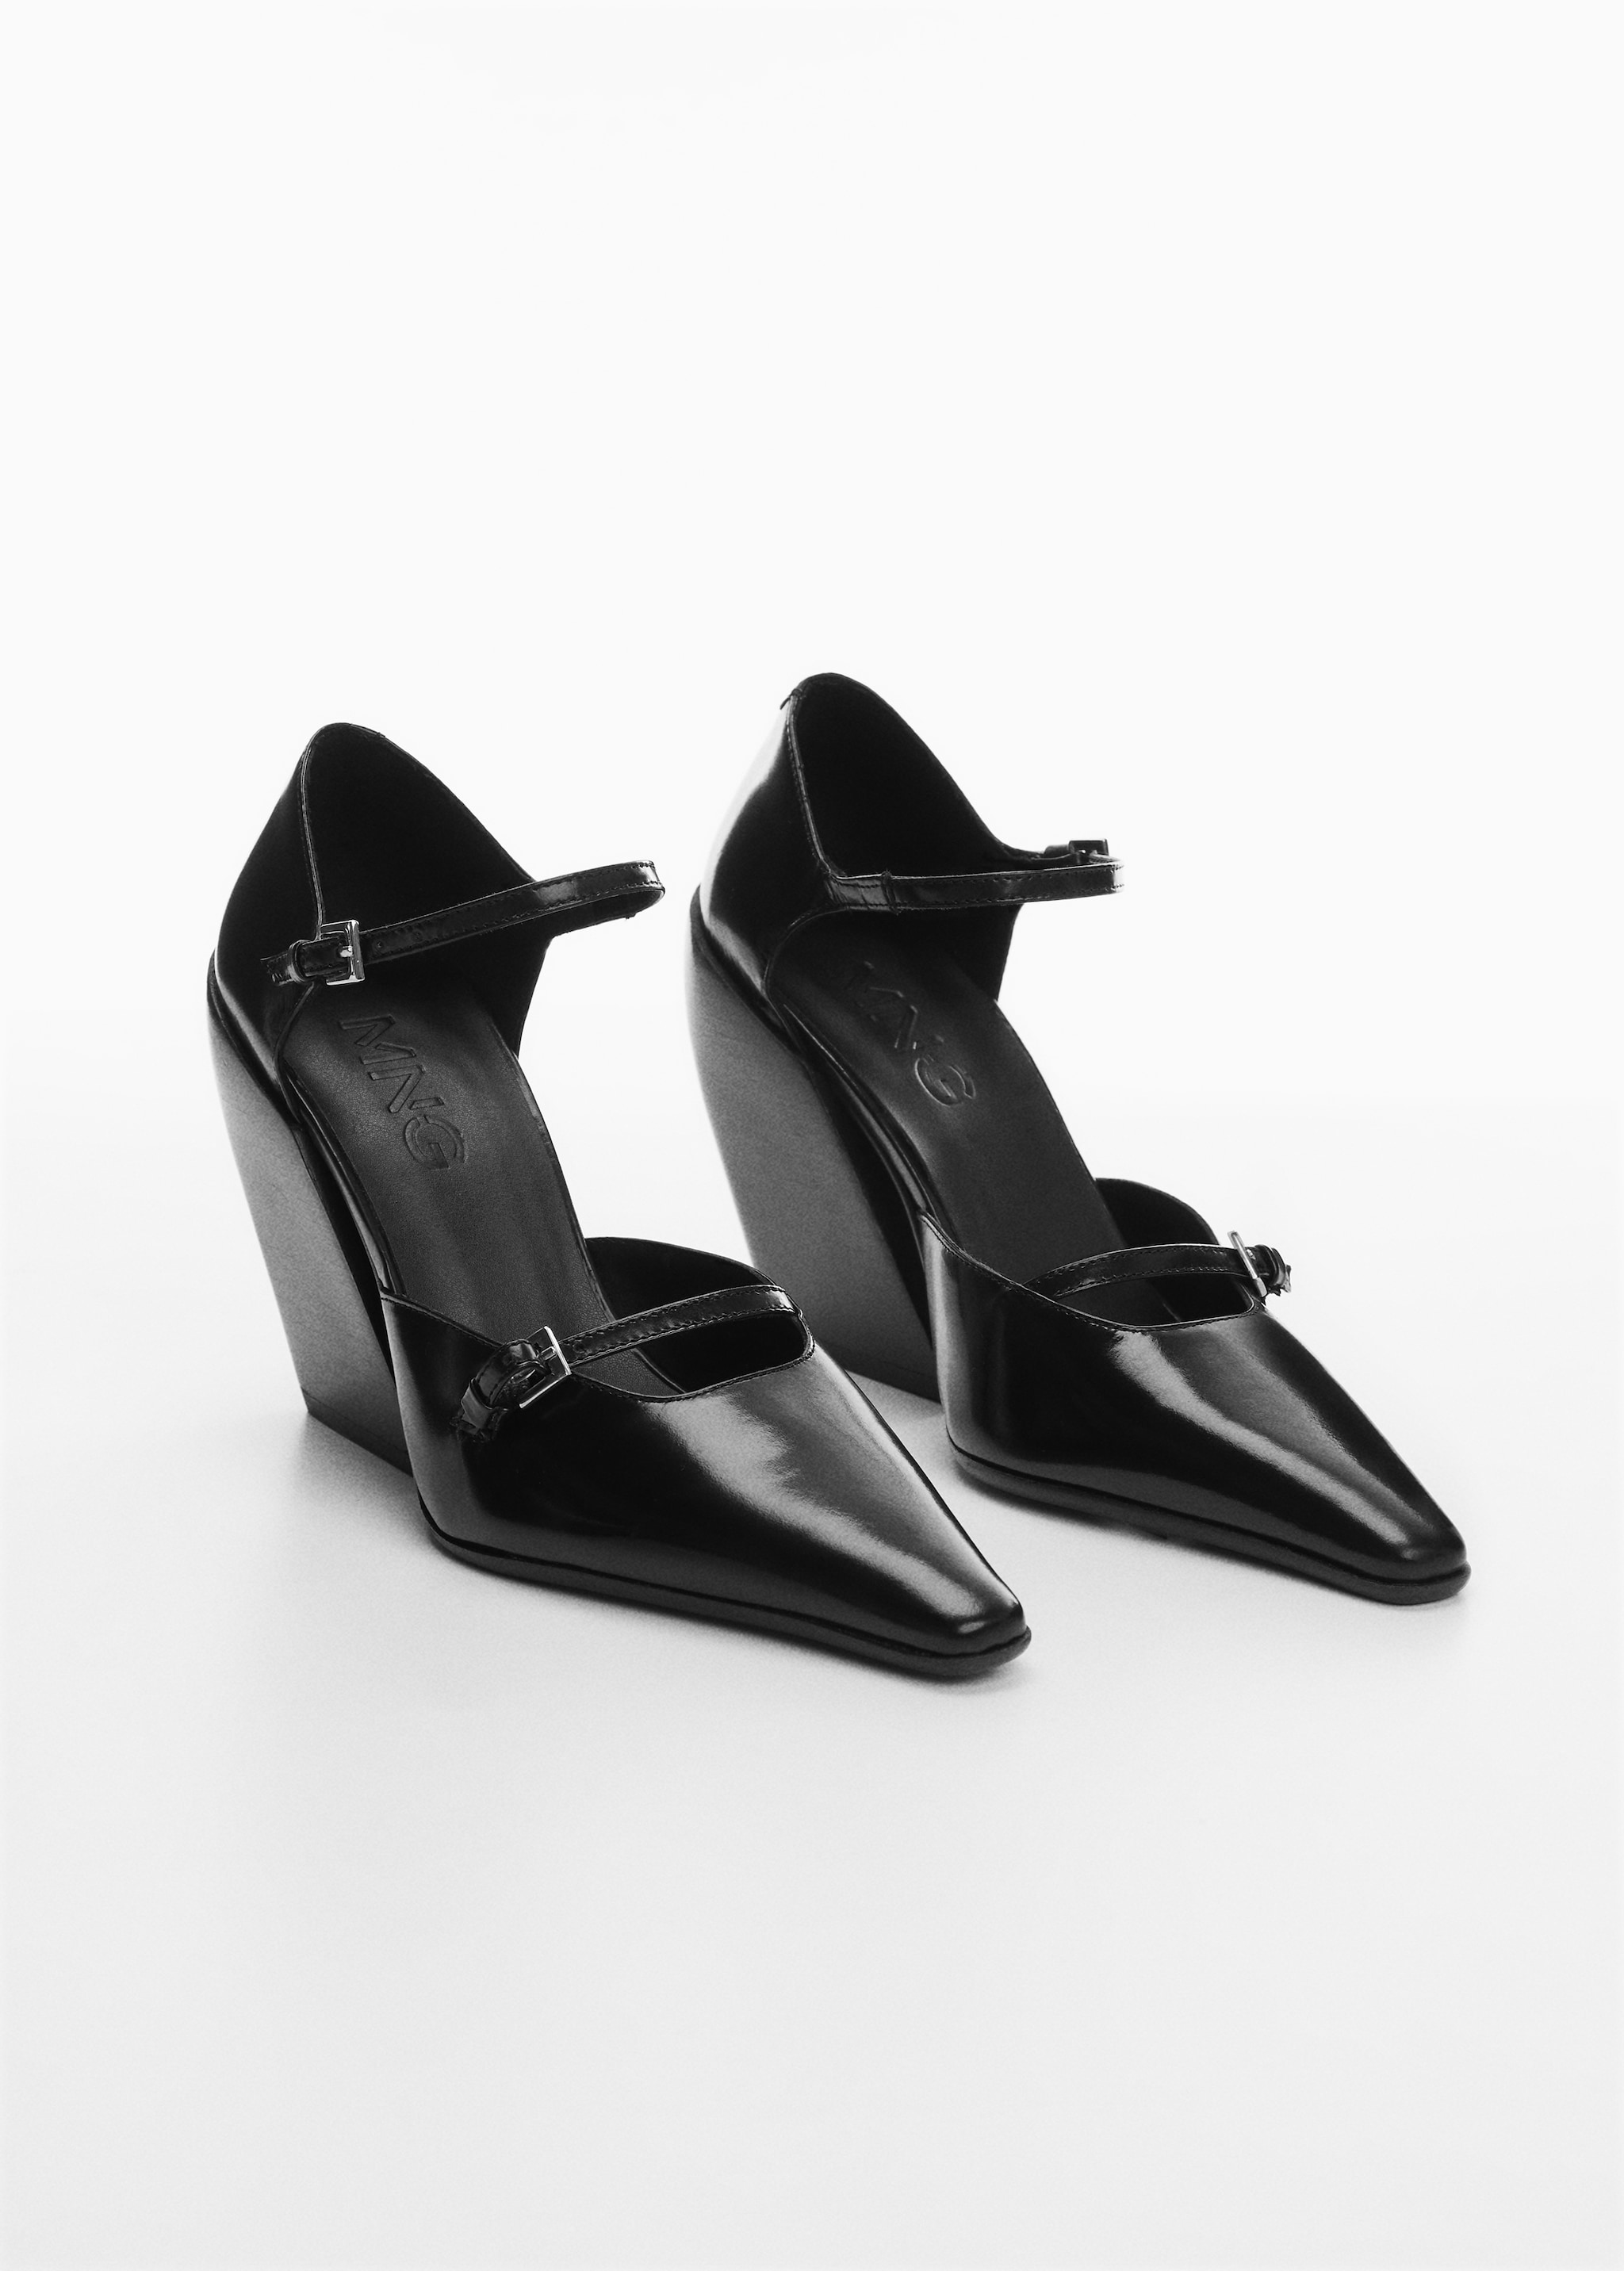 Block heel leather shoes - Medium plane